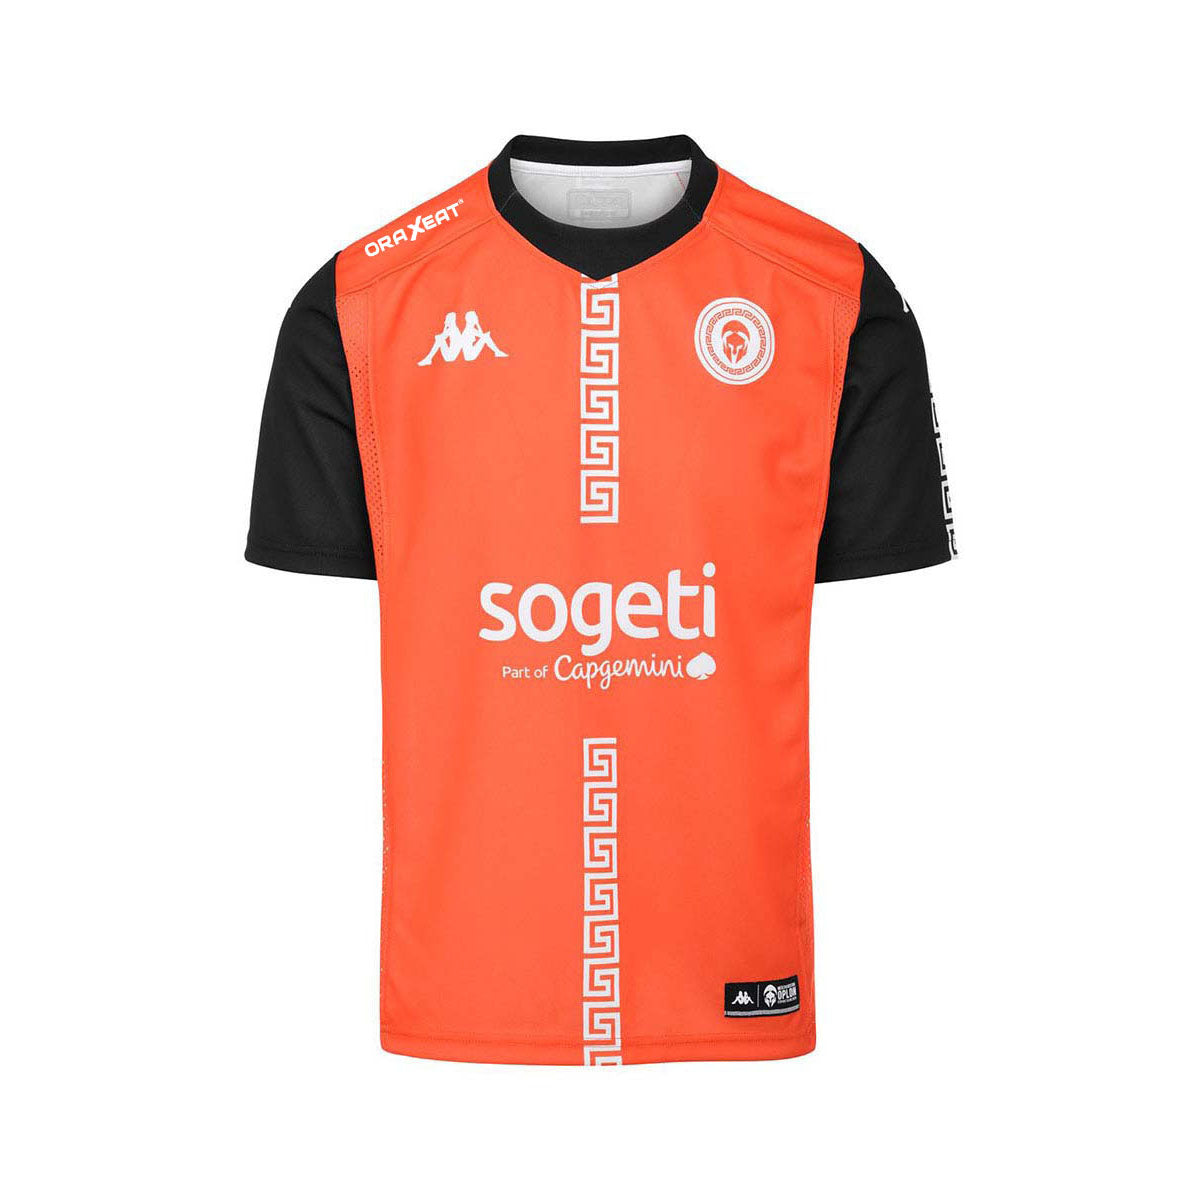 Camiseta de Juego officiel Team Oplon 2022 Naranja Hombre